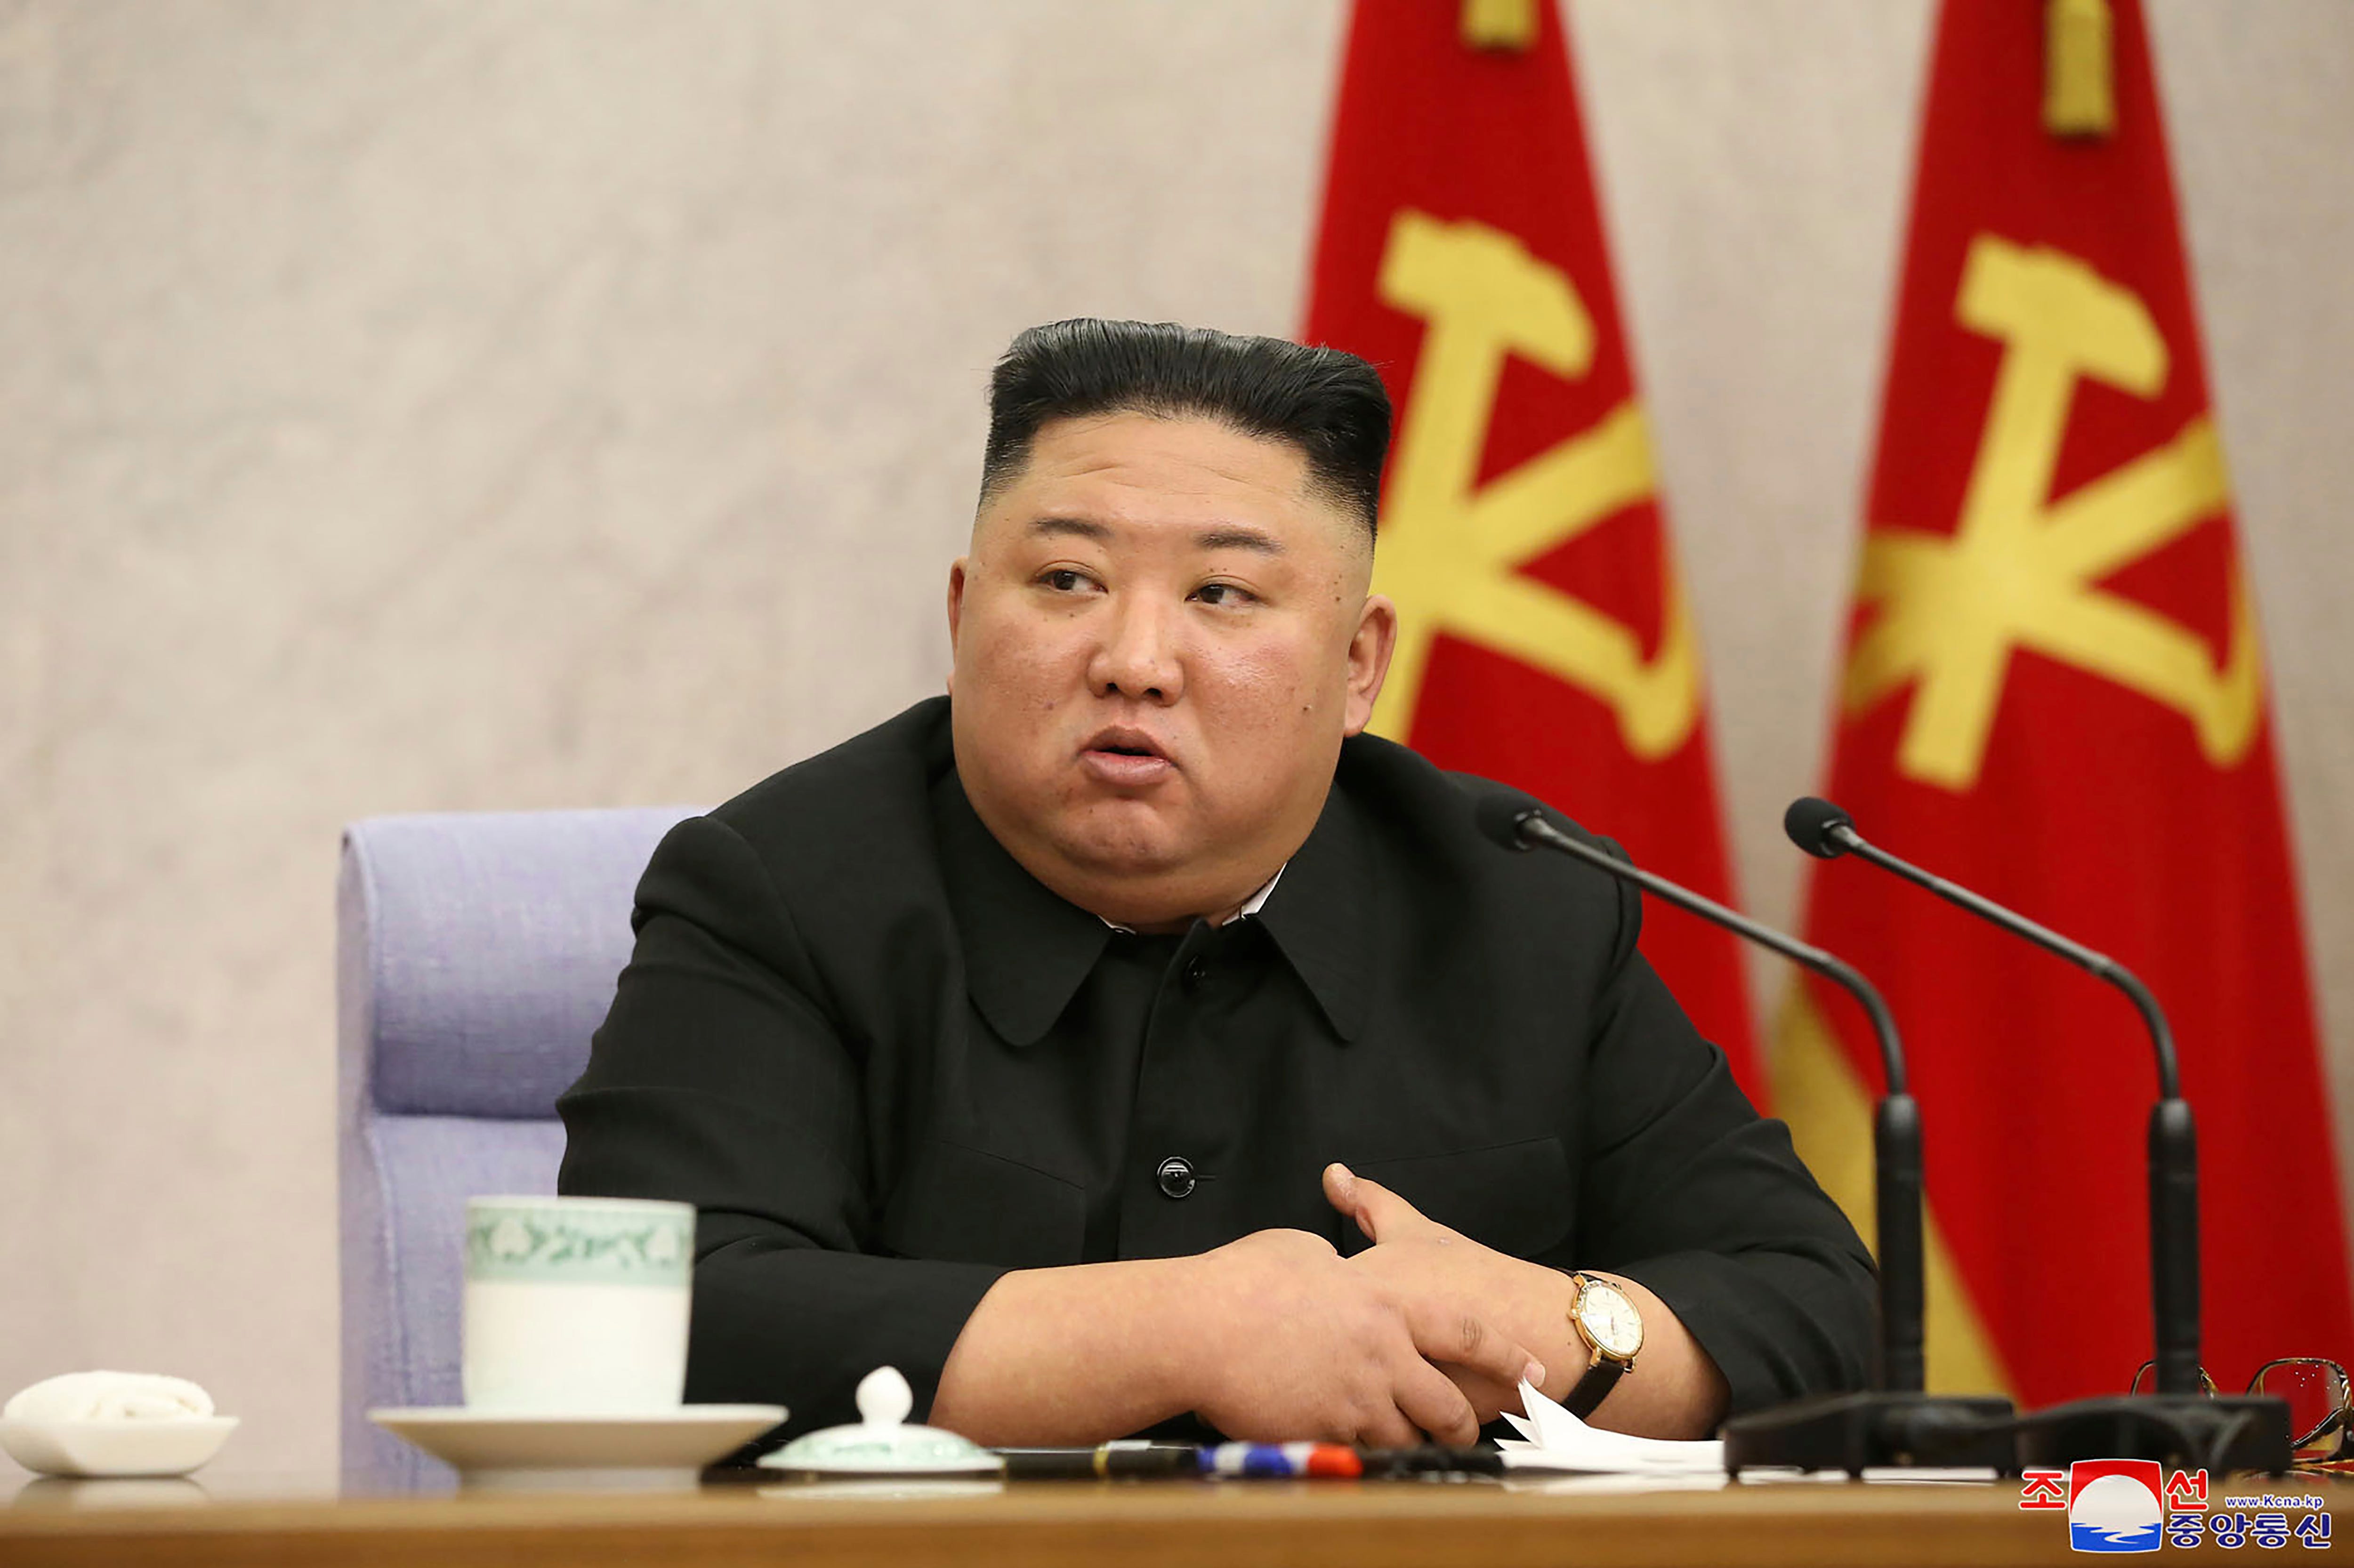 Kim warns of 'tense' food situation, longer COVID lockdown 3